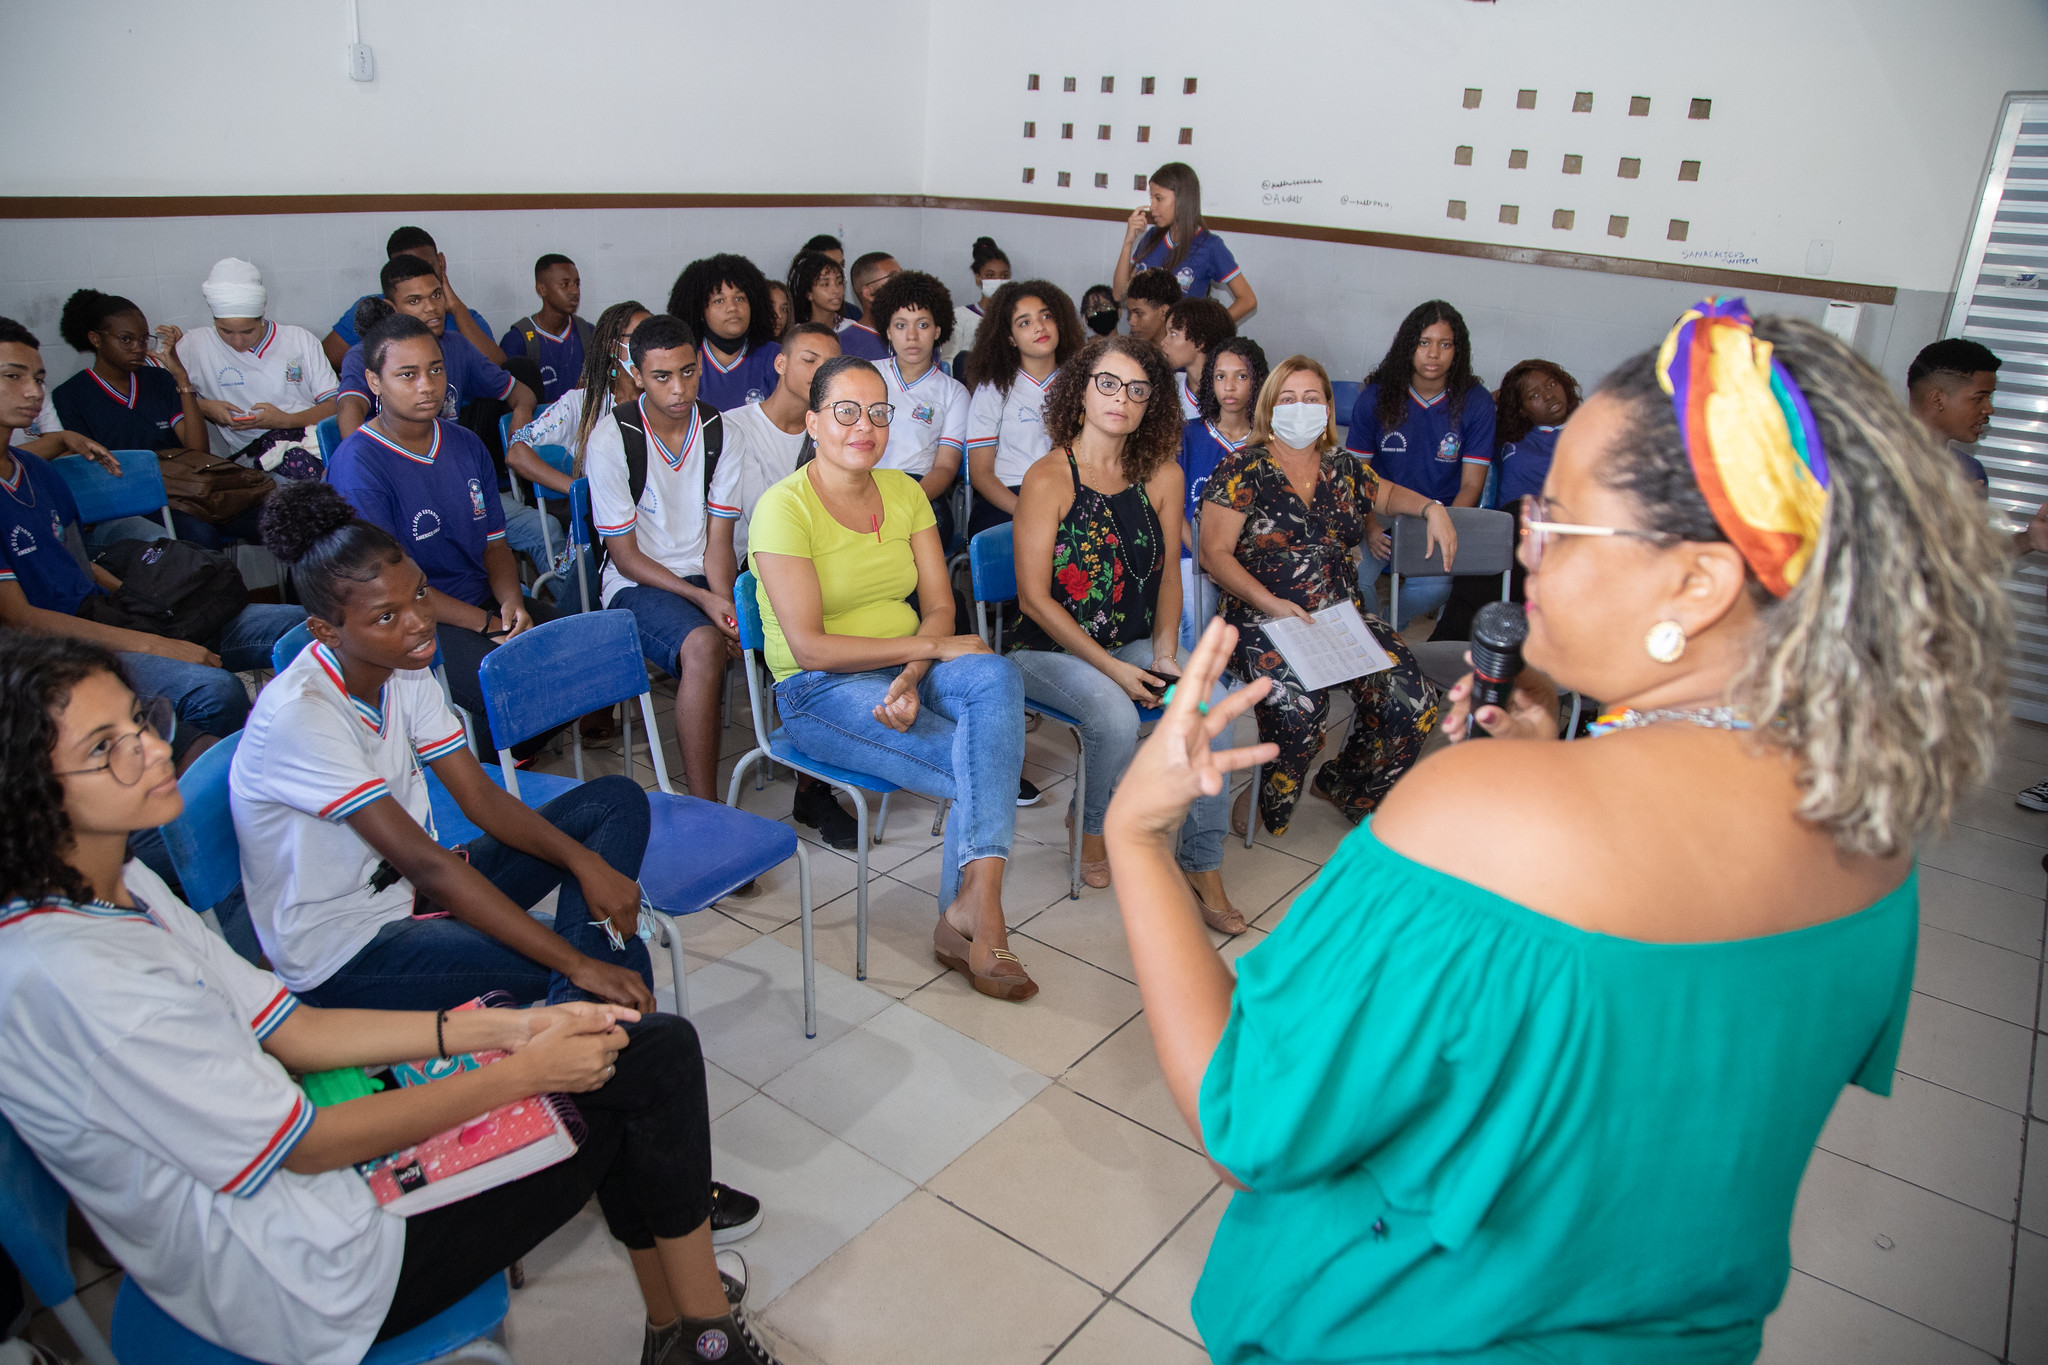 Semana da Diversidade: roda de conversa com estudantes de Lauro de Freitas debate orienta��o sexual e identidade de g�nero  